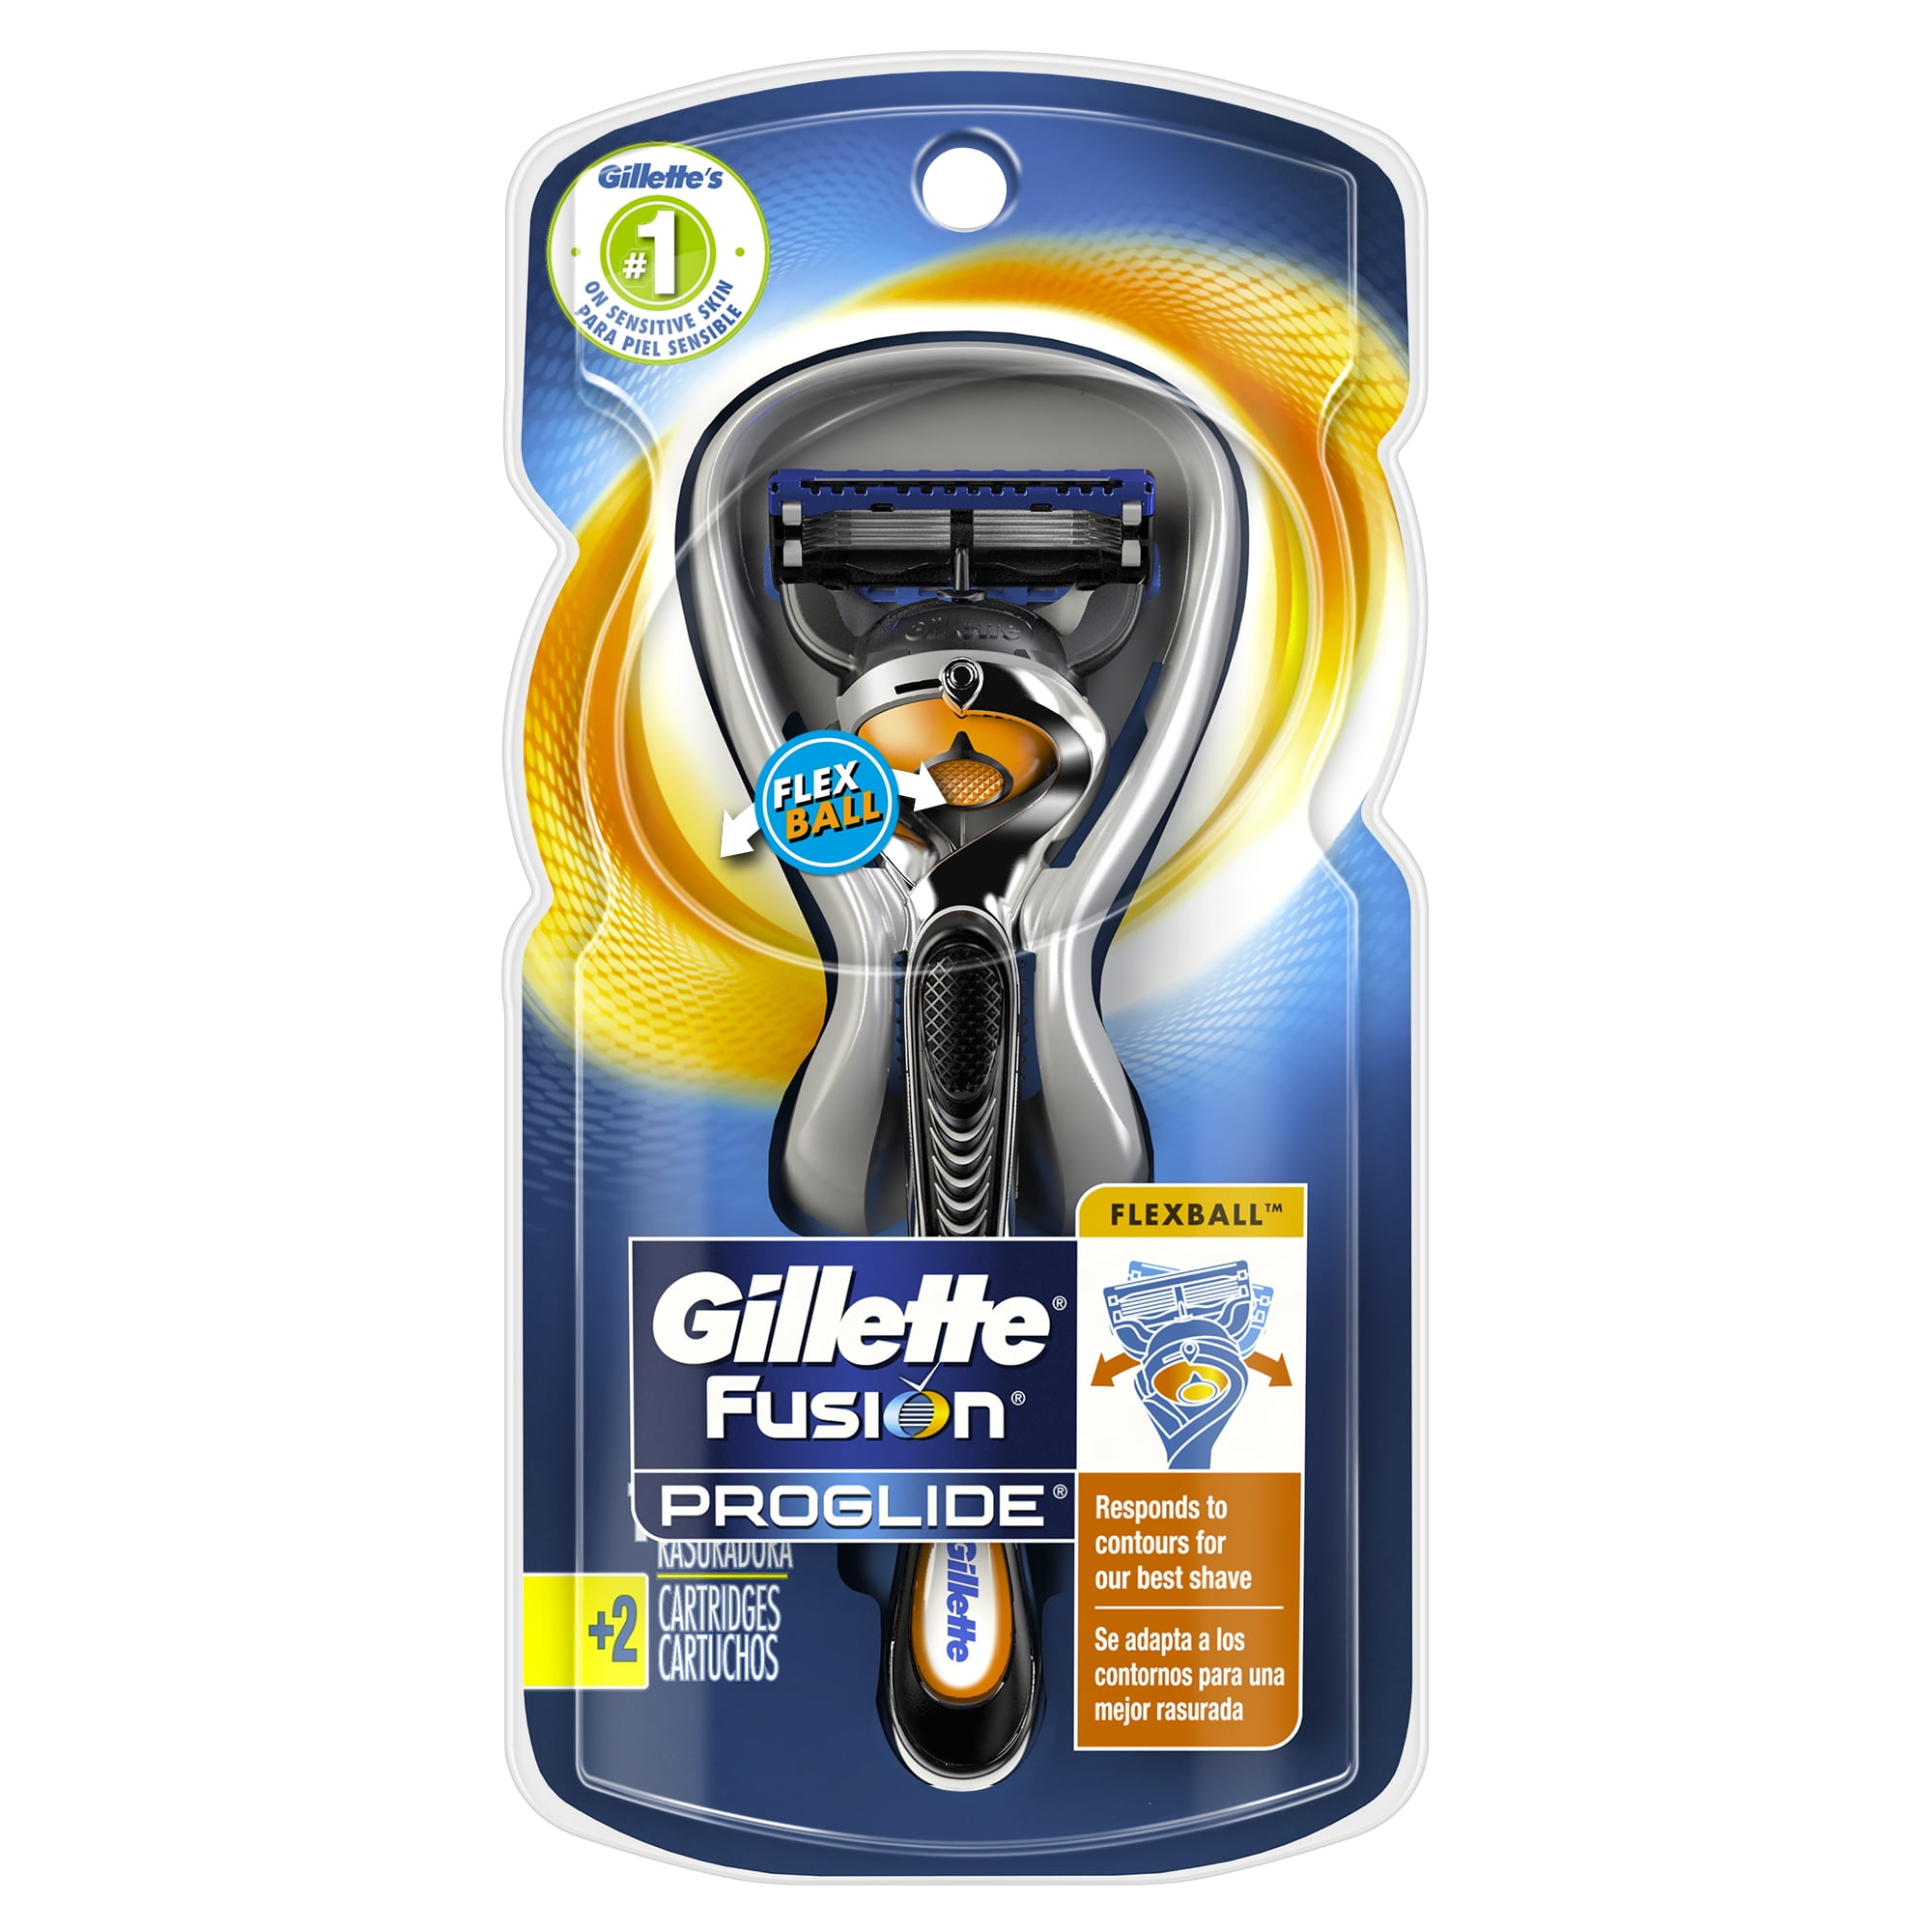 Original Gillette Fusion5 ProGlide Power Men Razor with FlexBall Technology  Safty Shaving 5 Layers Blades Manual Shaver for Men